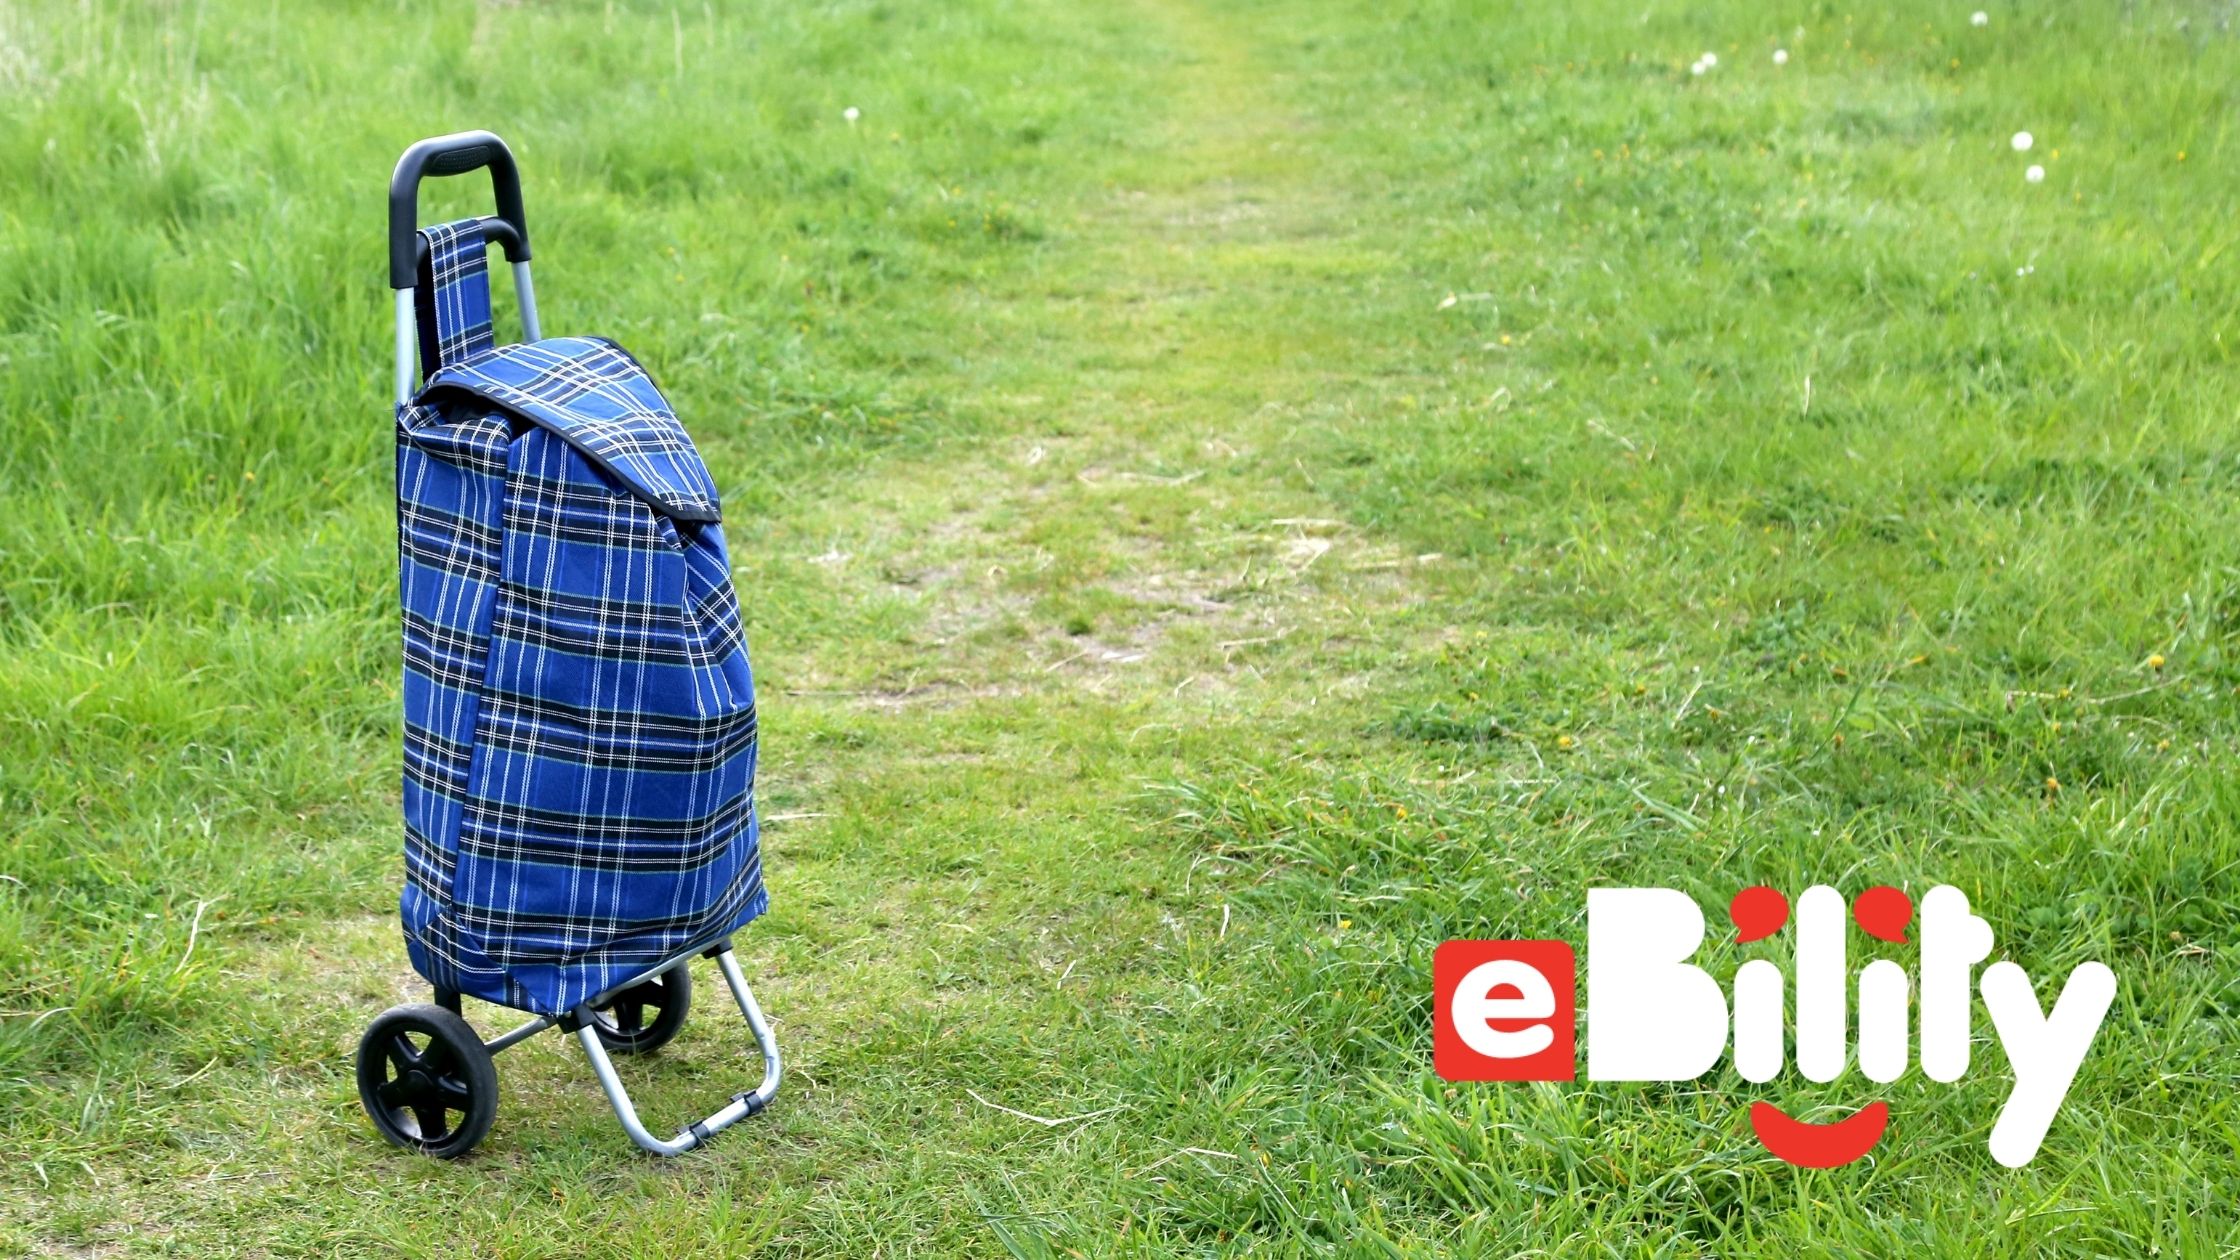 blue tartan shopping trolley bag on grass